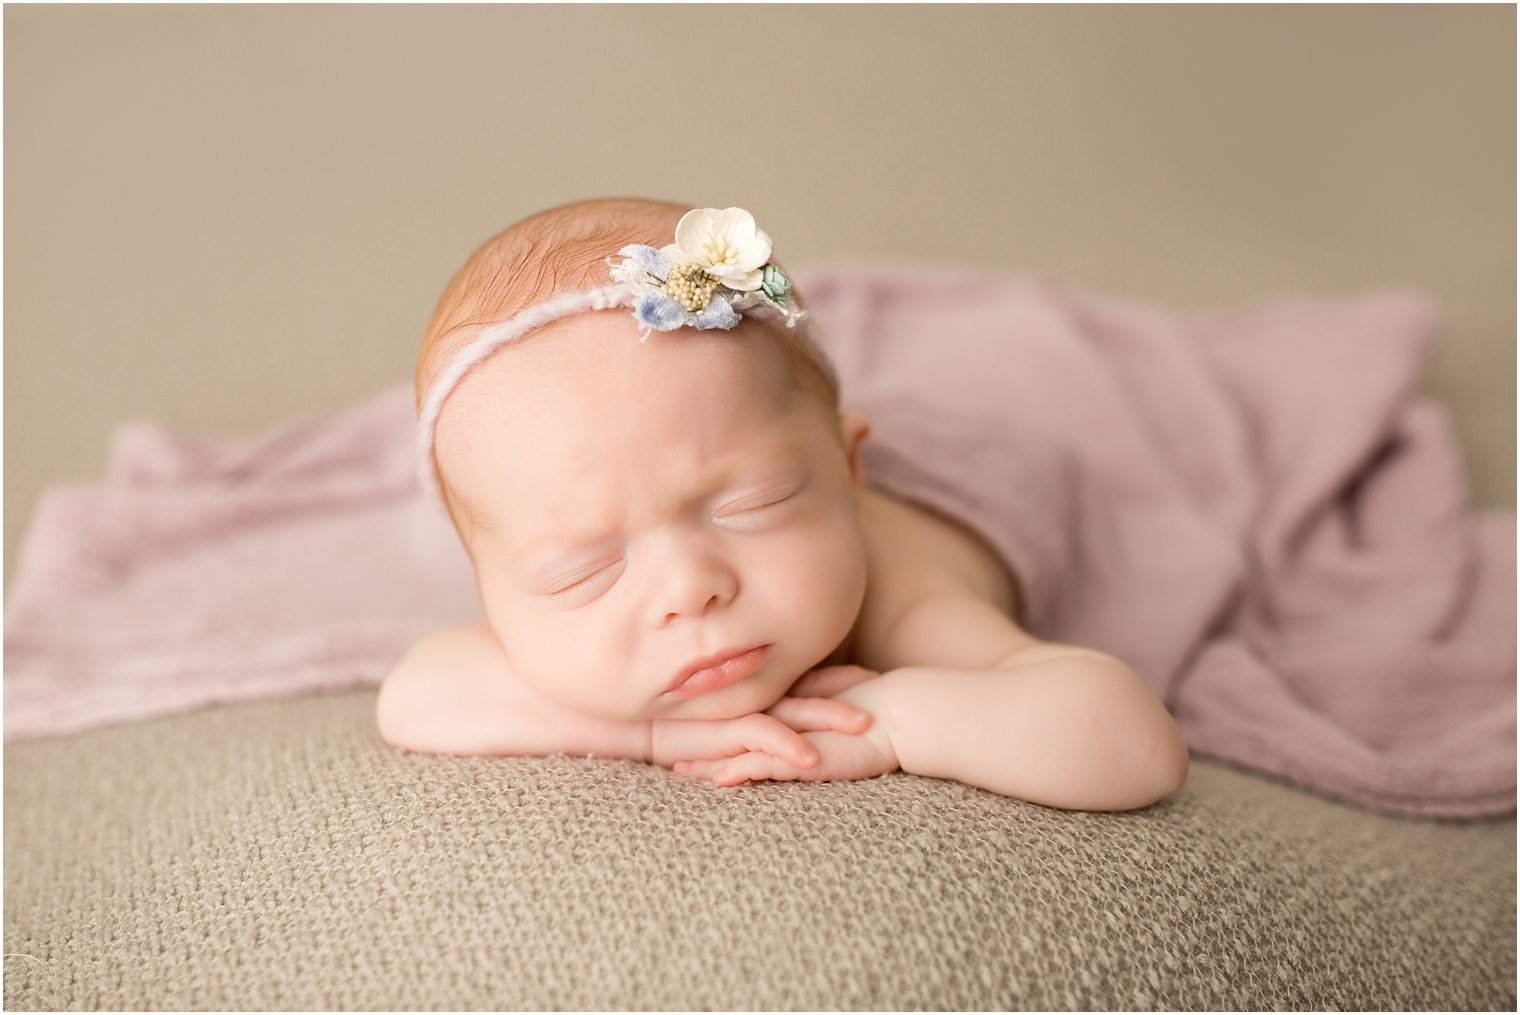 Newborn girl in chin on hands pose